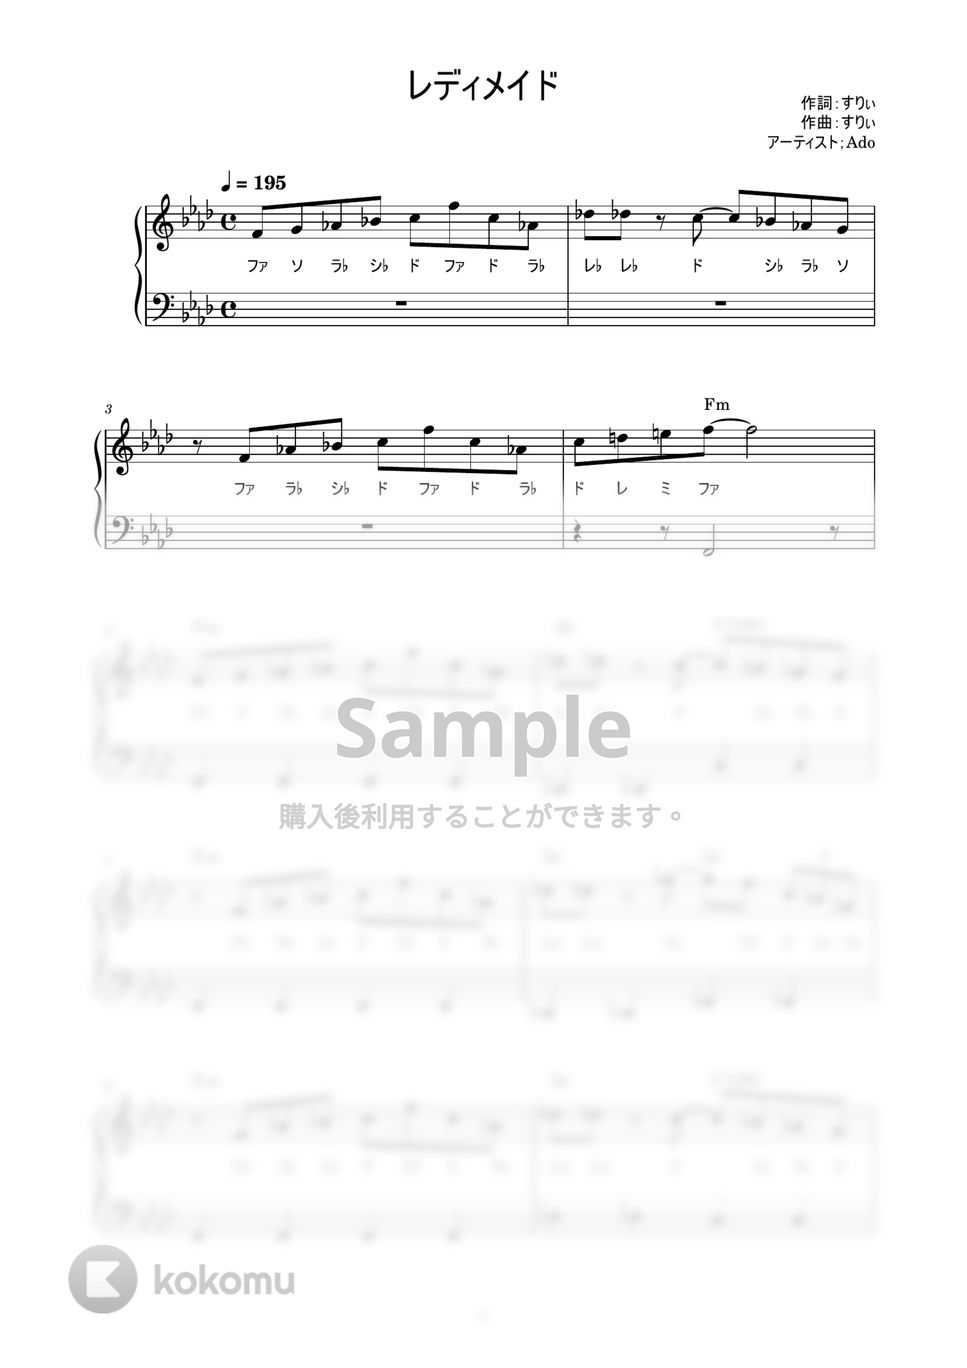 Ado - レディメイド (かんたん / 歌詞付き / ドレミ付き / 初心者) by piano.tokyo